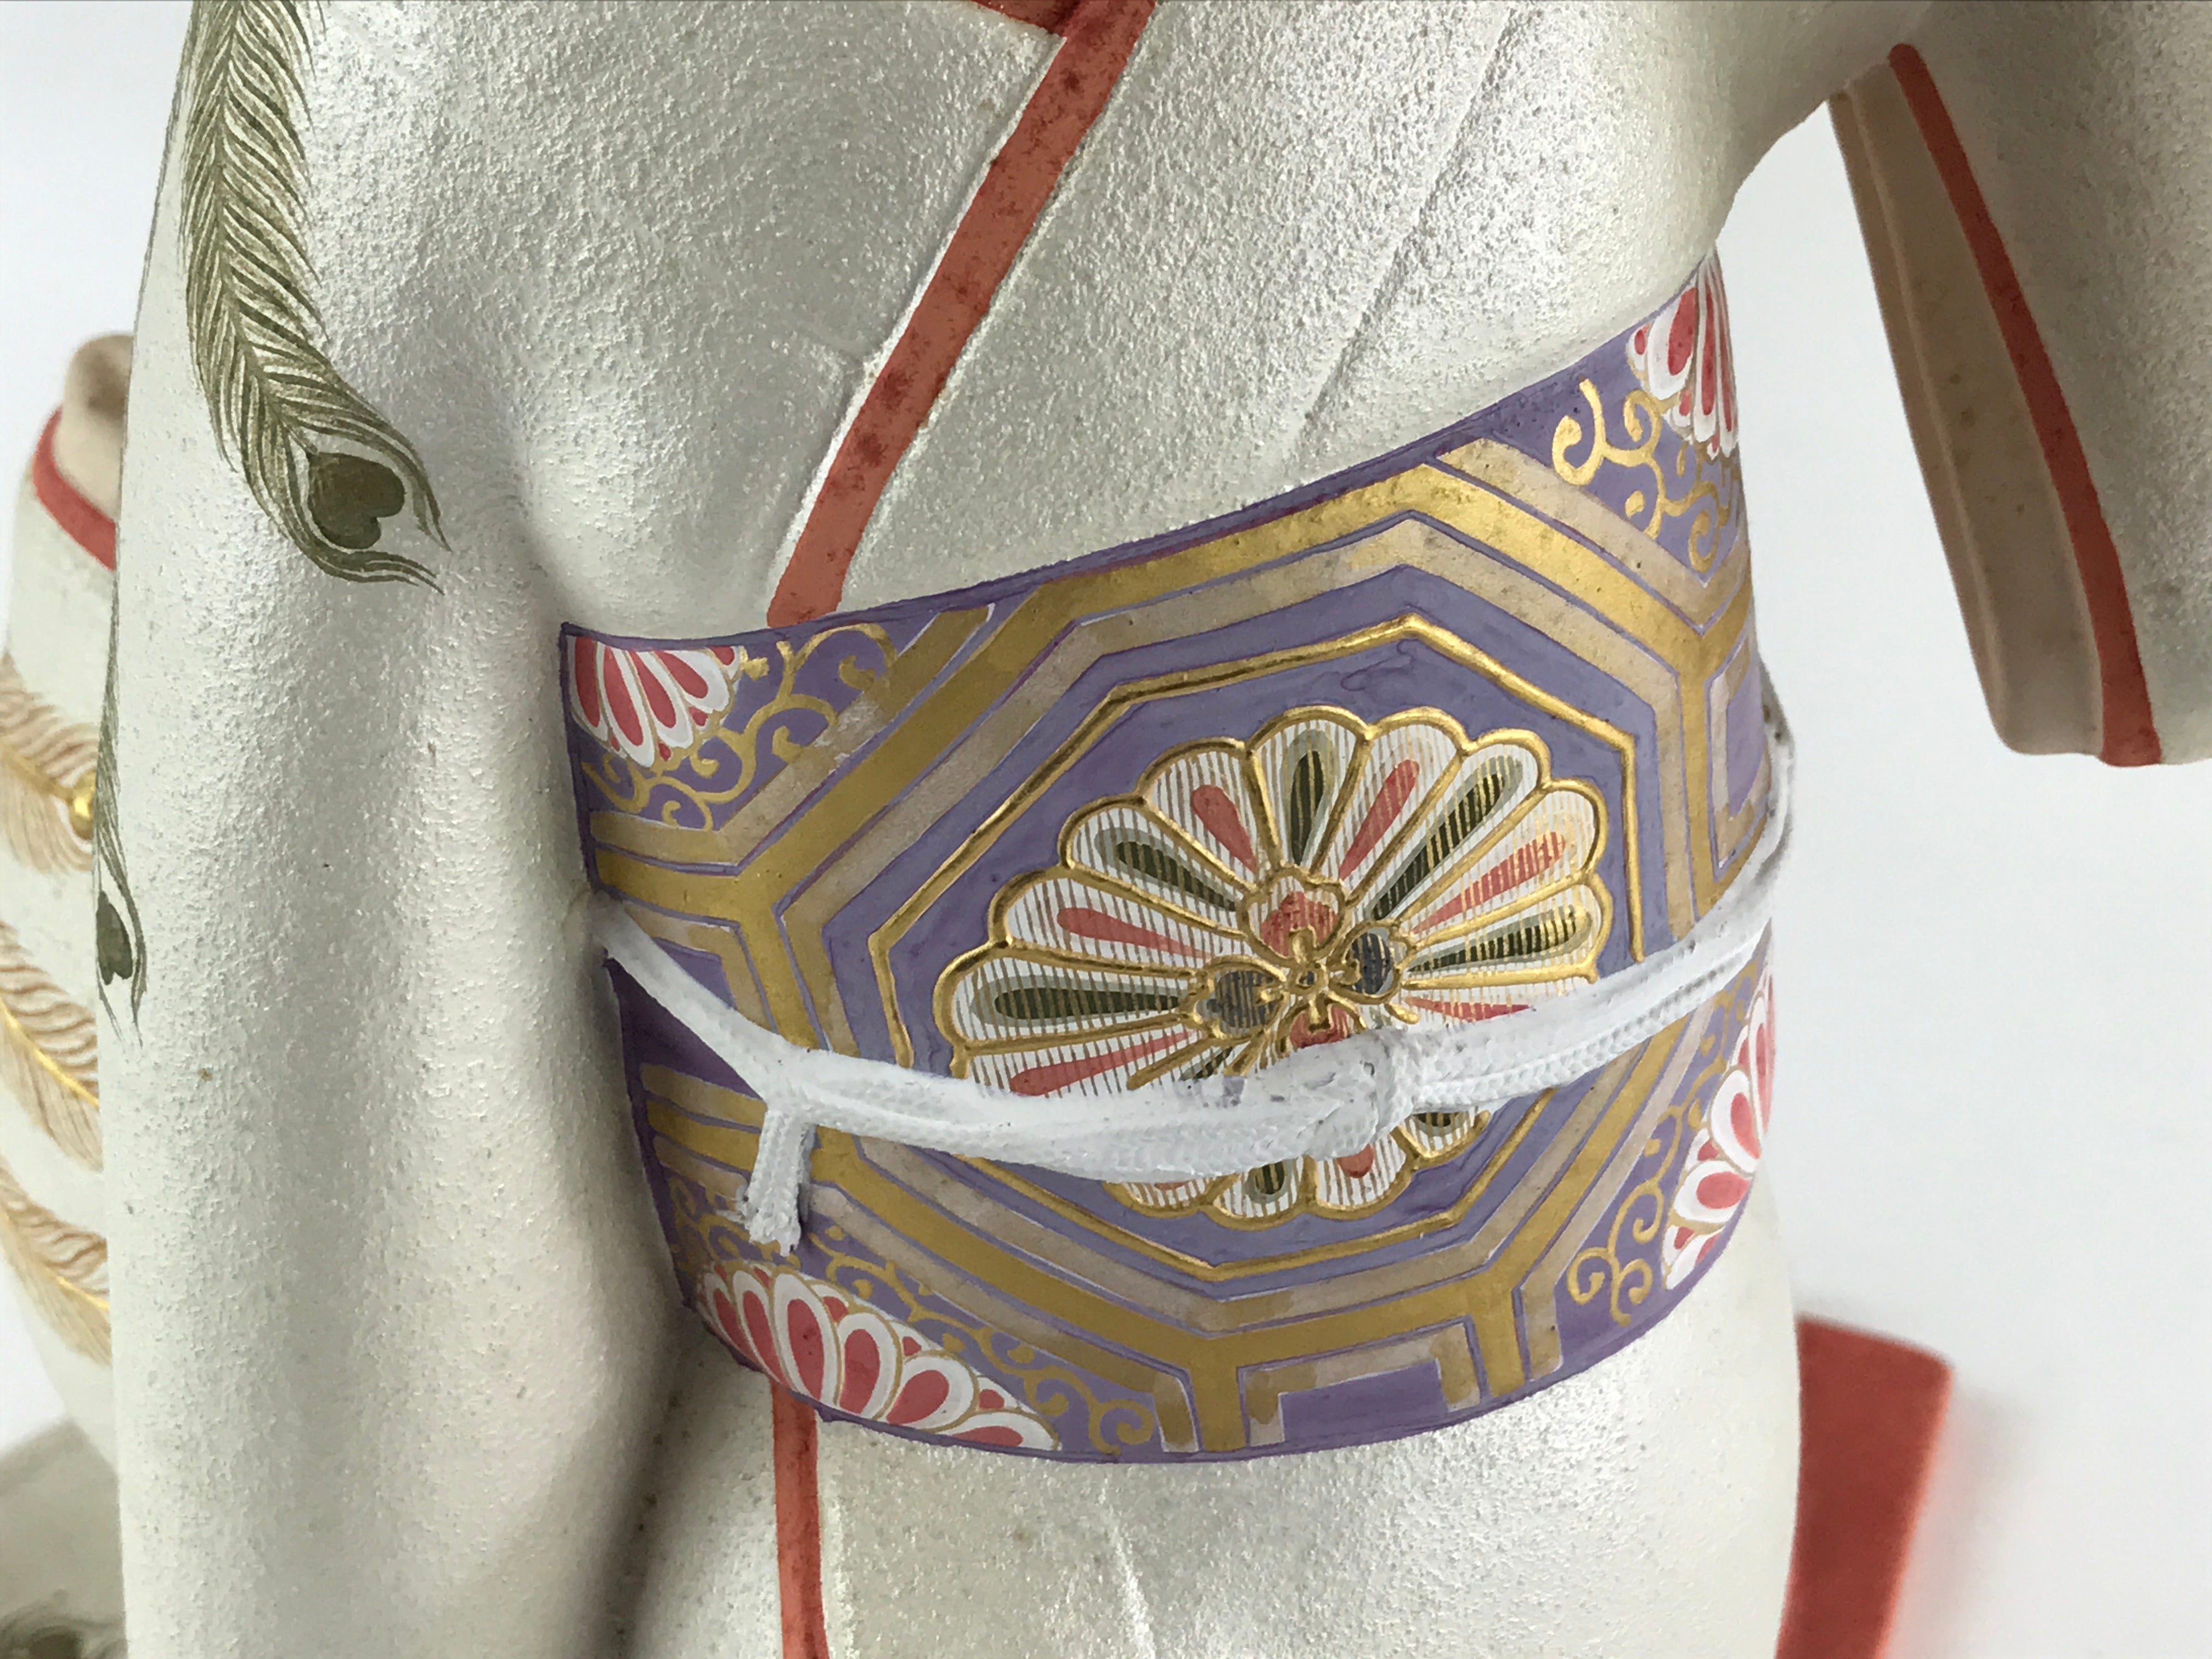 Japanese Ceramic Geisha Doll Vtg Sofuren Akiko Traditional Handicraft White BD87